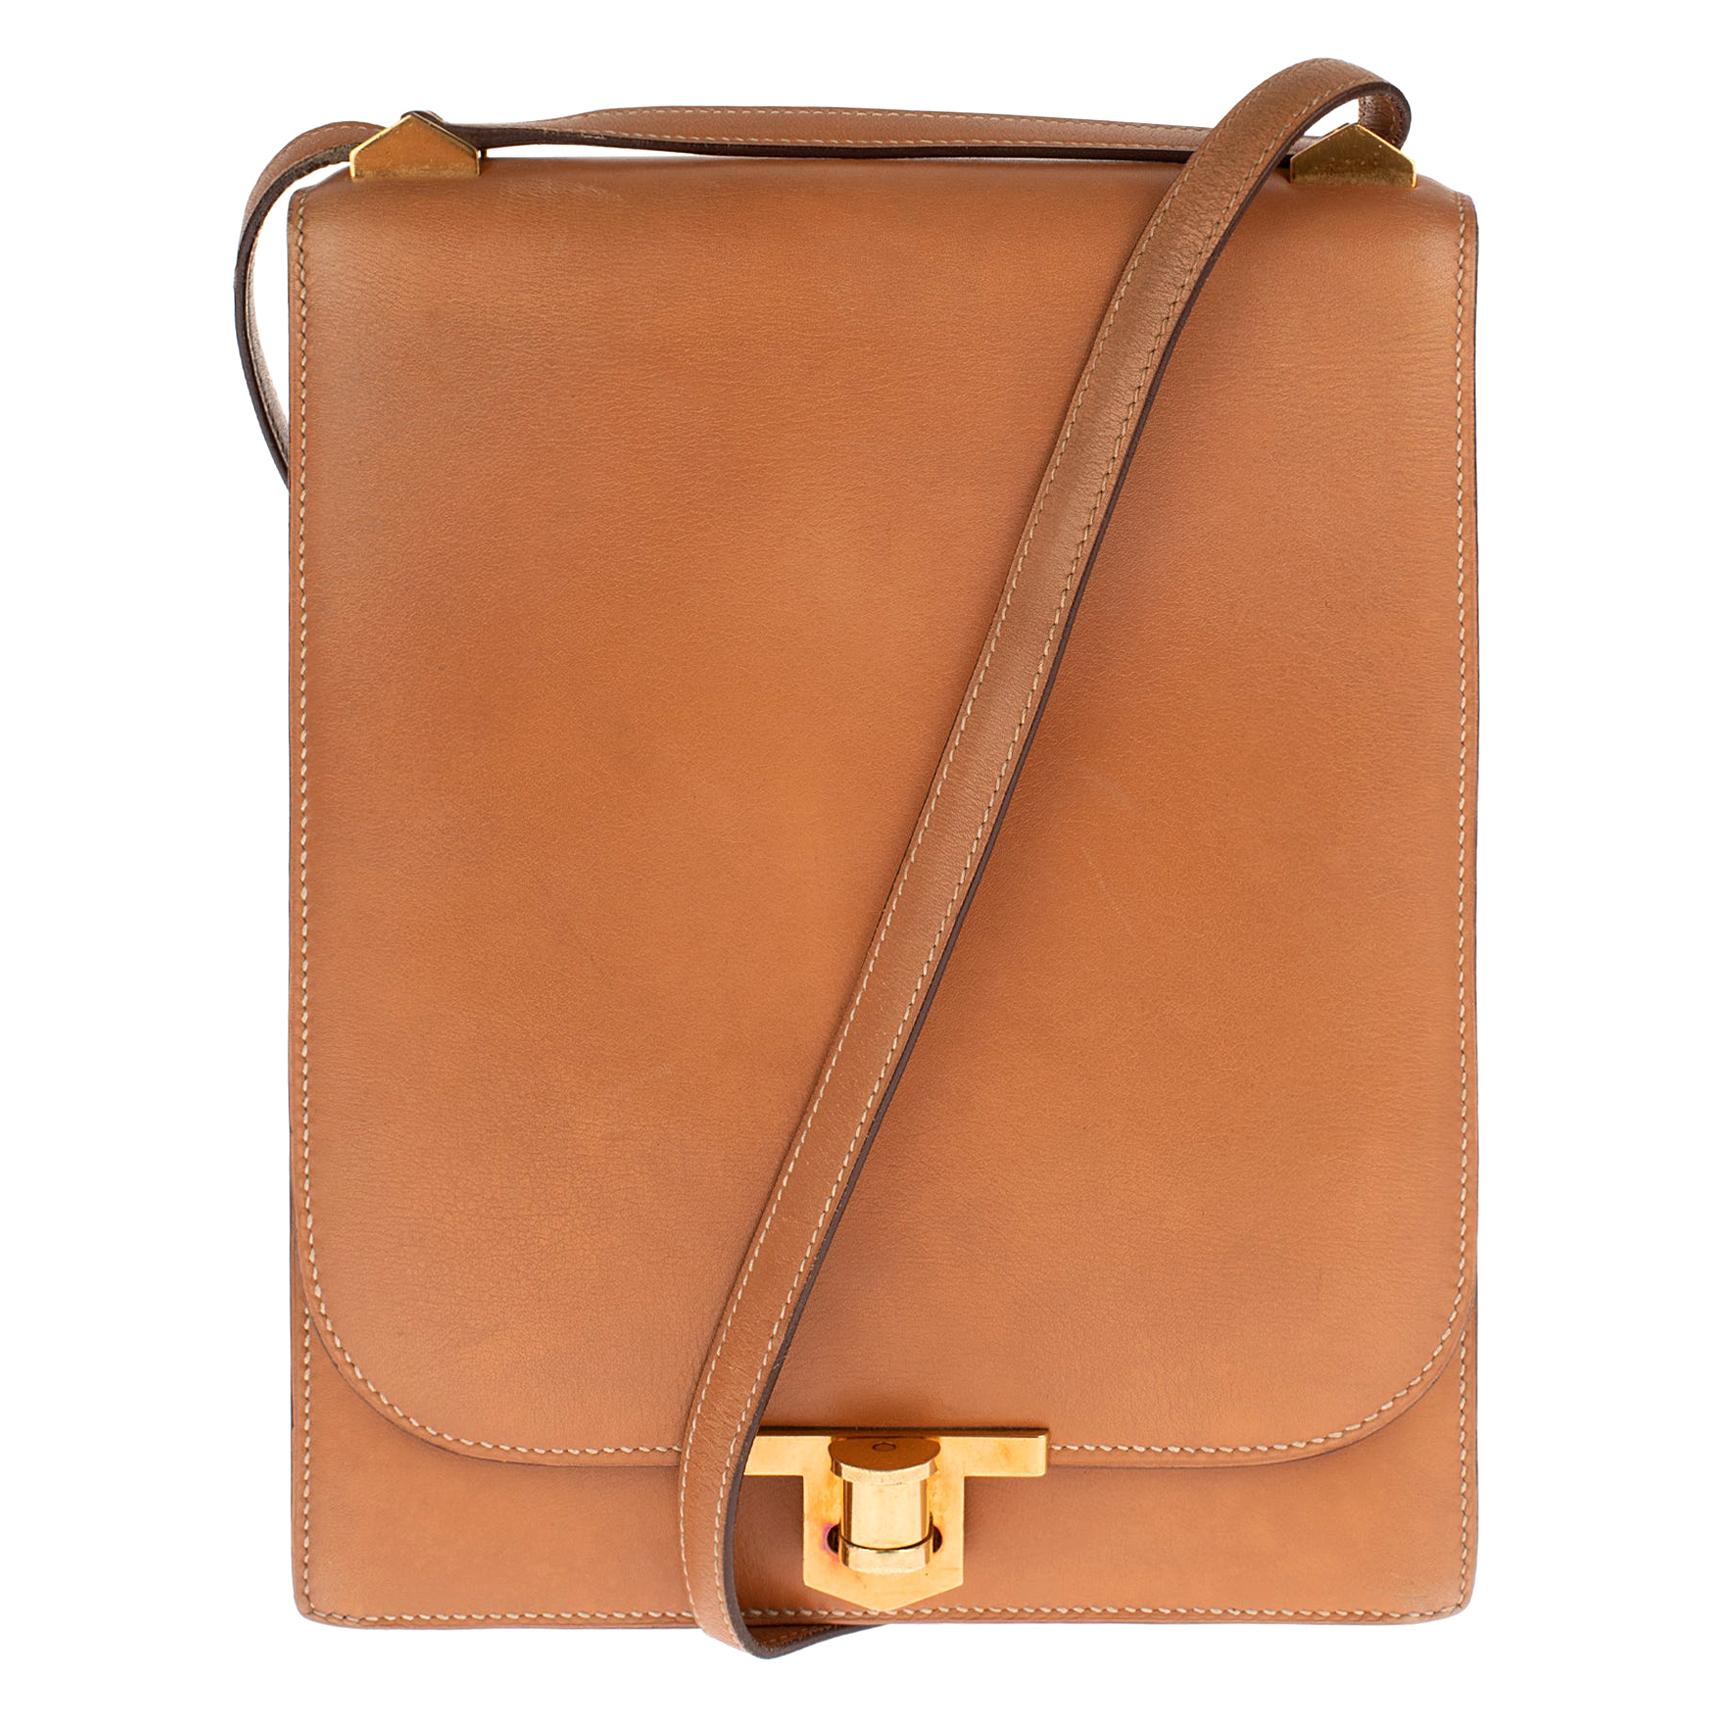 Hermès Hobo bag in gold calfskin leather with golden hardware !